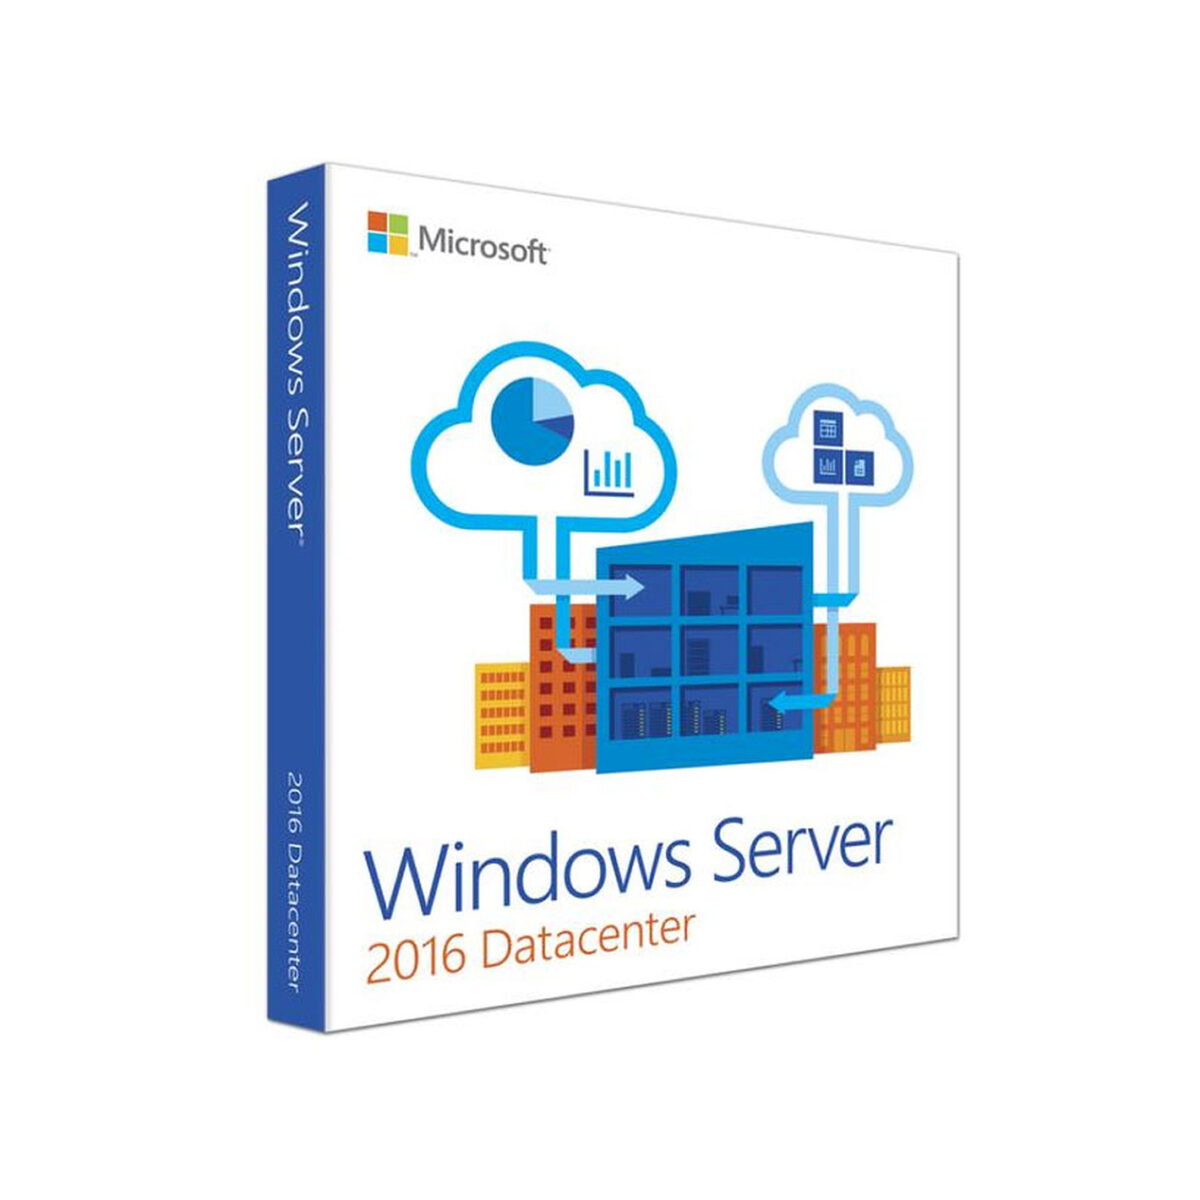 Imagen Windows Server 2016 Datacenter